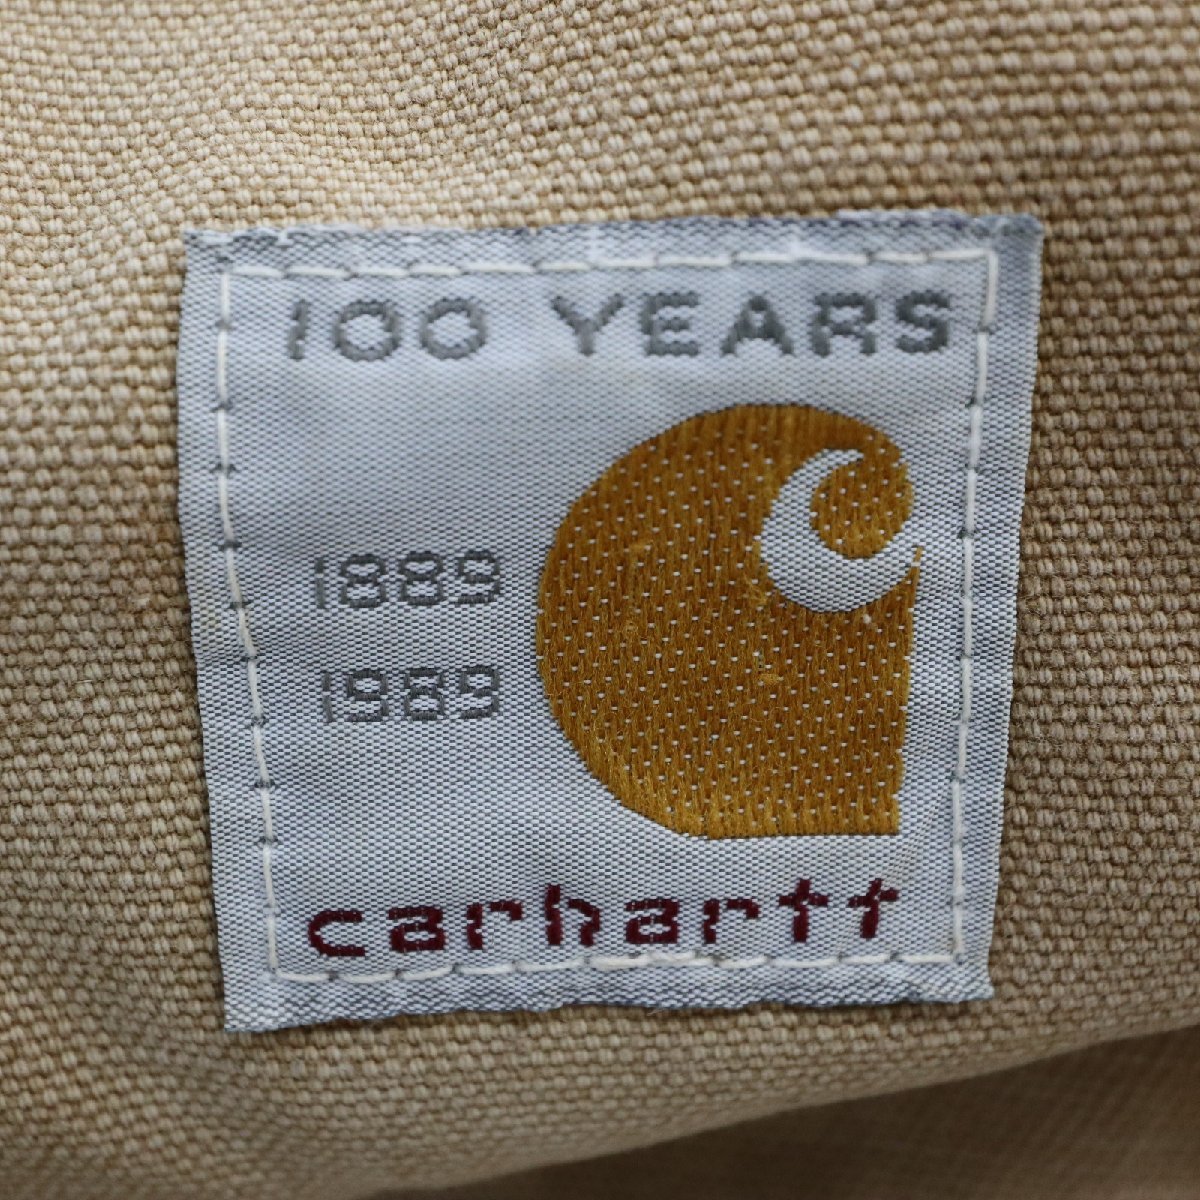 SALE///// 80年代 USA製 Carhartt カーハート オールインワン 100周年記念 ワークウェア 作業着 DIY キャメル ( メンズ 40R ) M8014_画像10